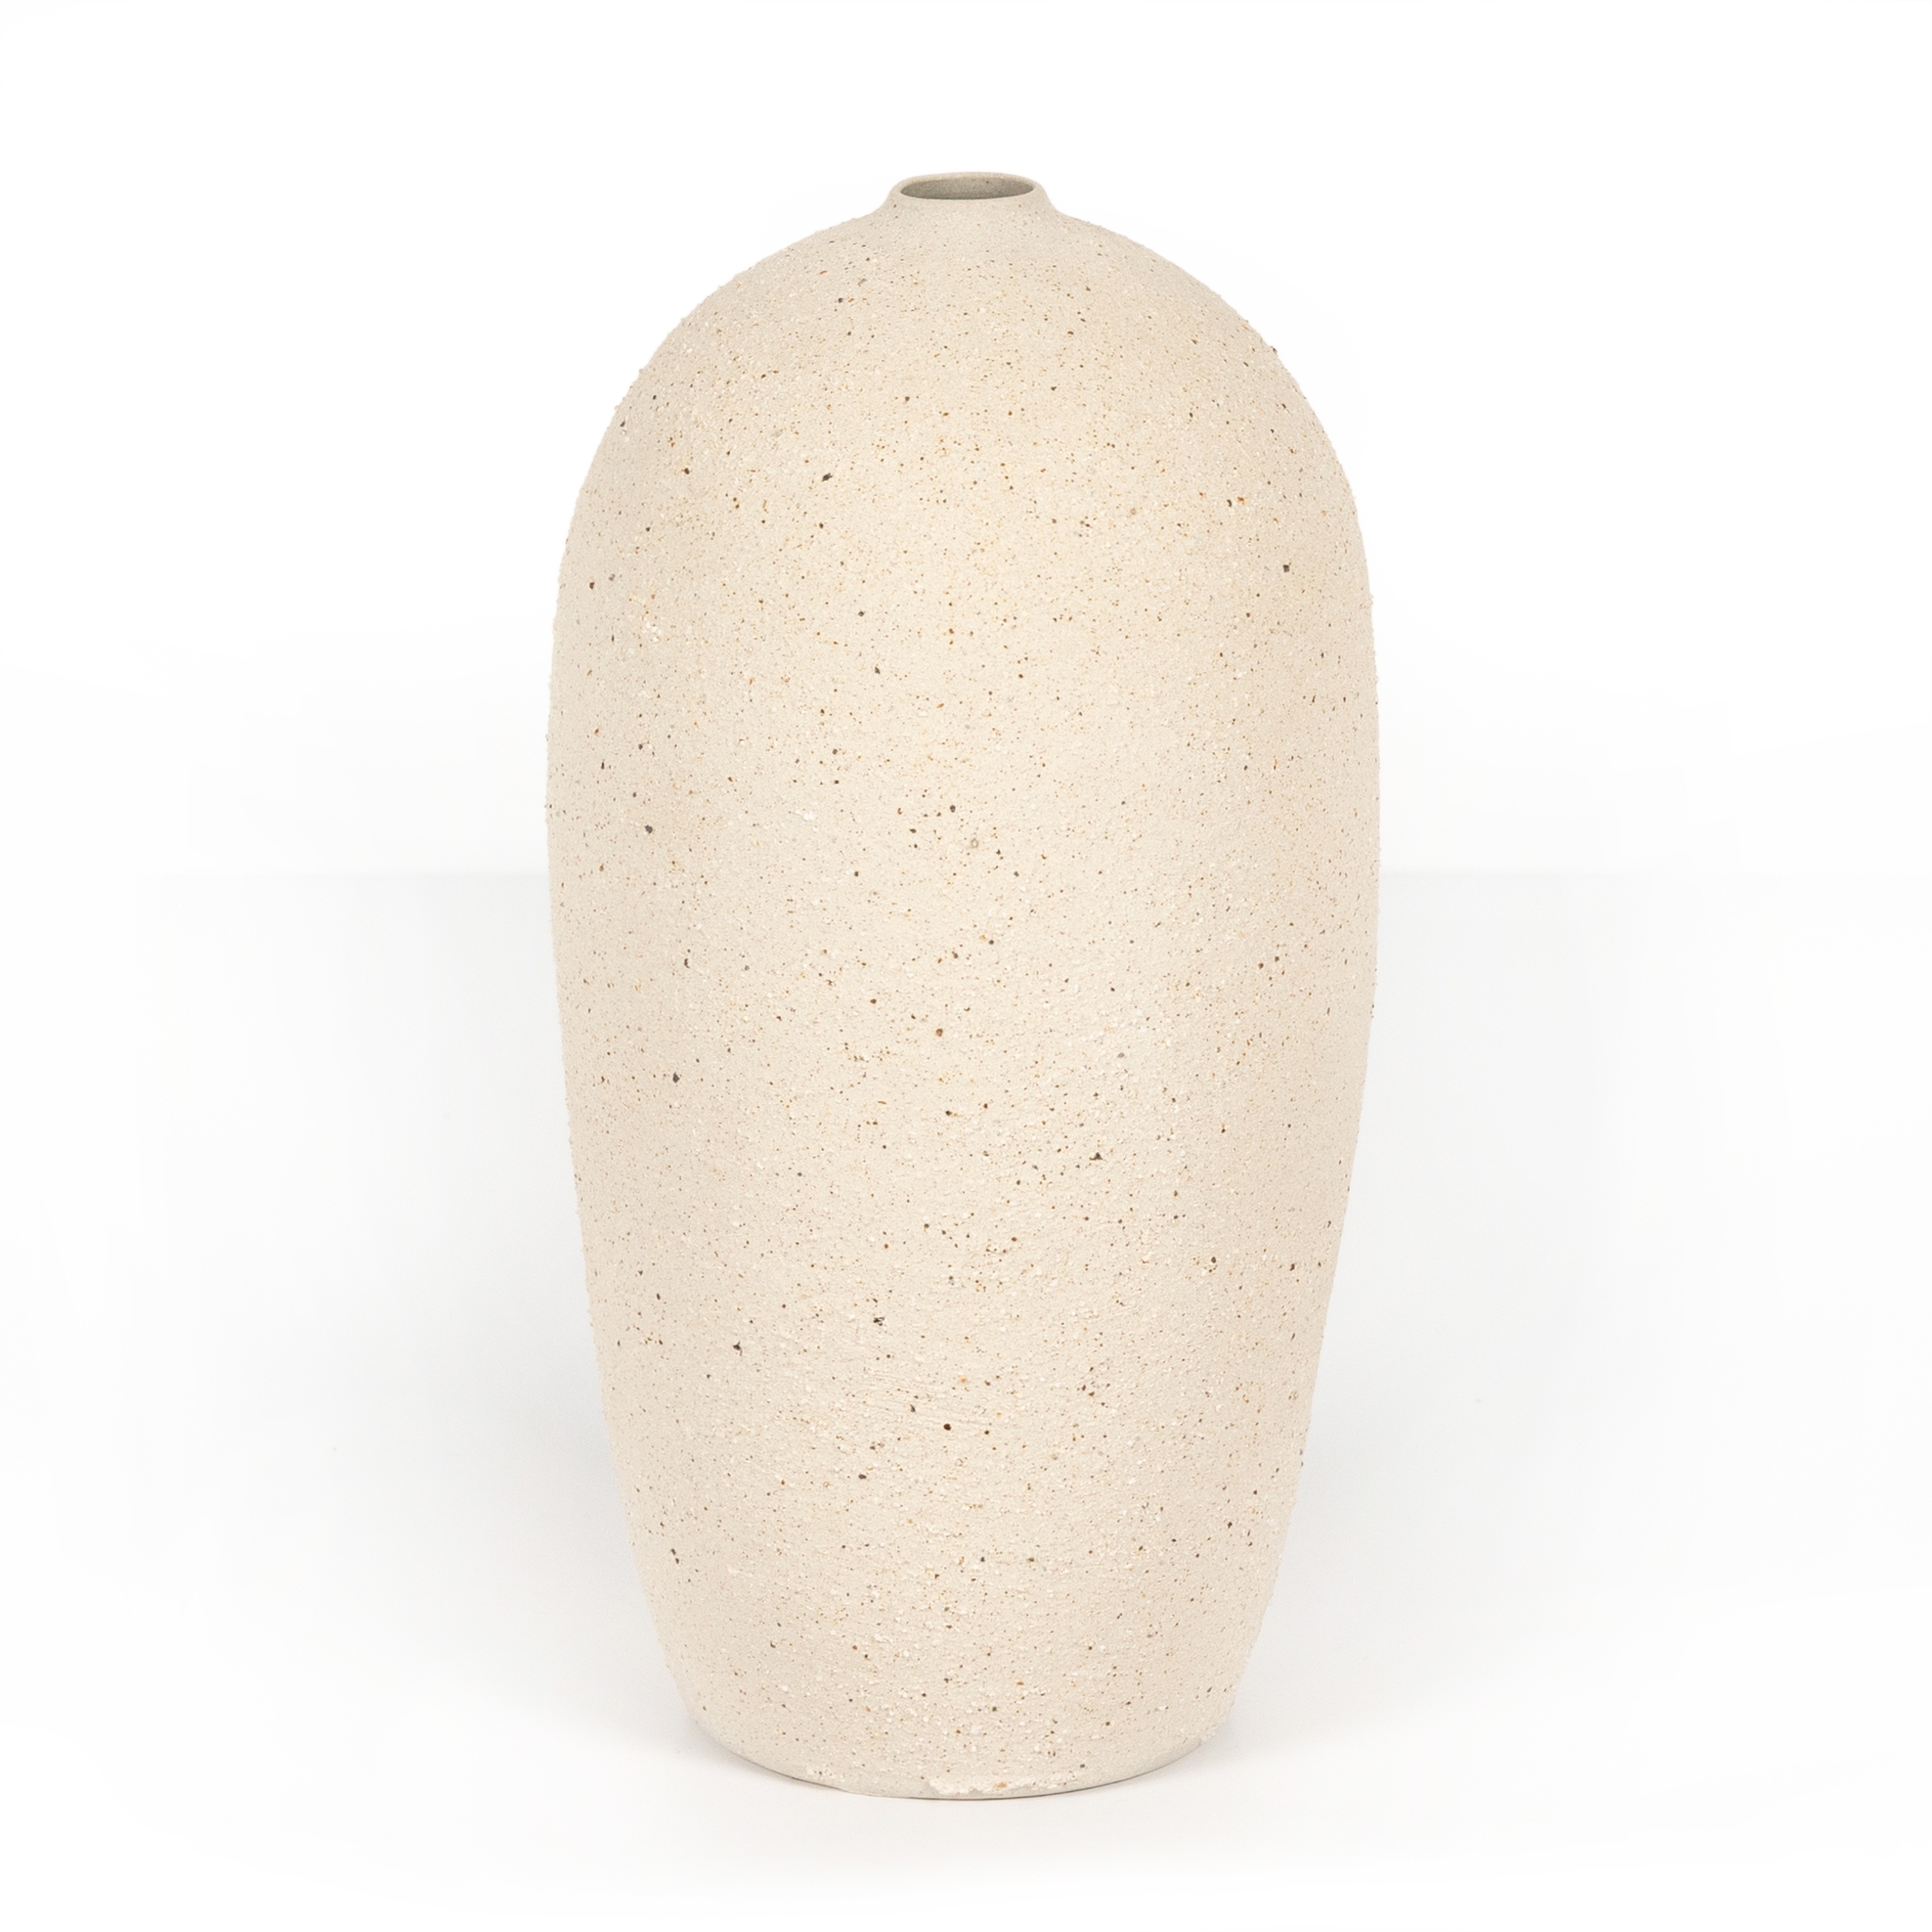 Izan Tall Vase-Natural Grog Ceramic - Image 0